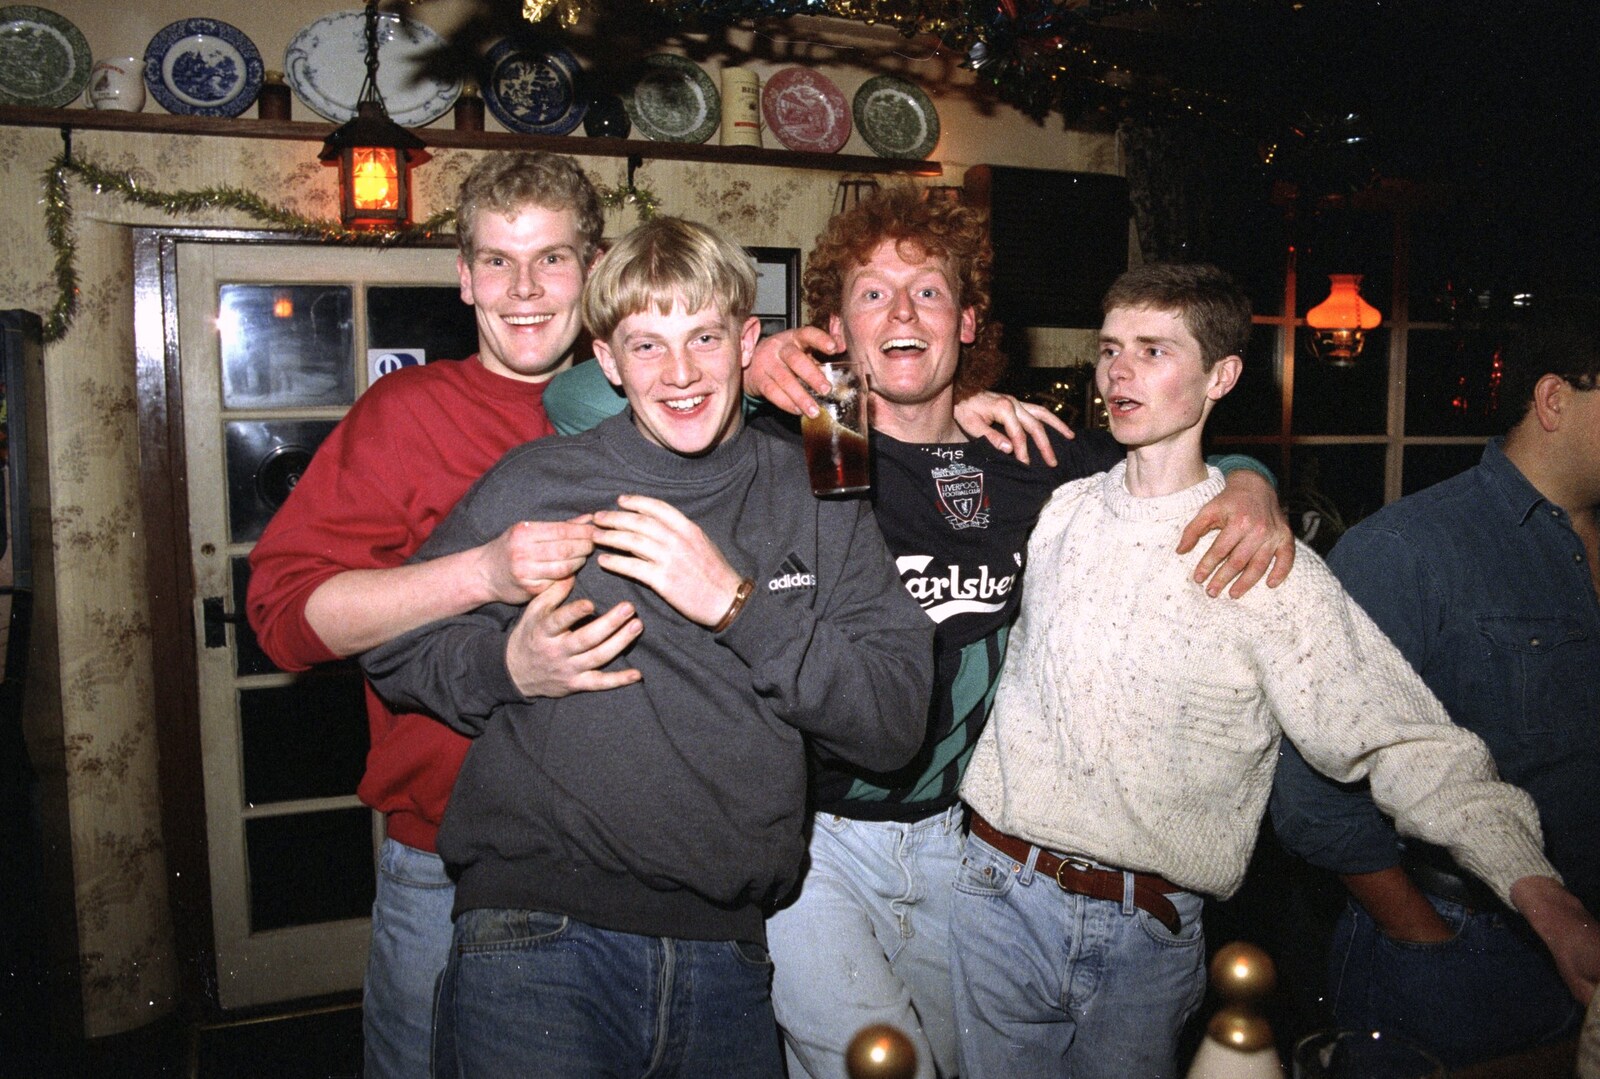 Bill, Paul, Wavy and 'ninja' Jon from New Year's Eve at the Swan Inn, Brome, Suffolk - 31st December 1994